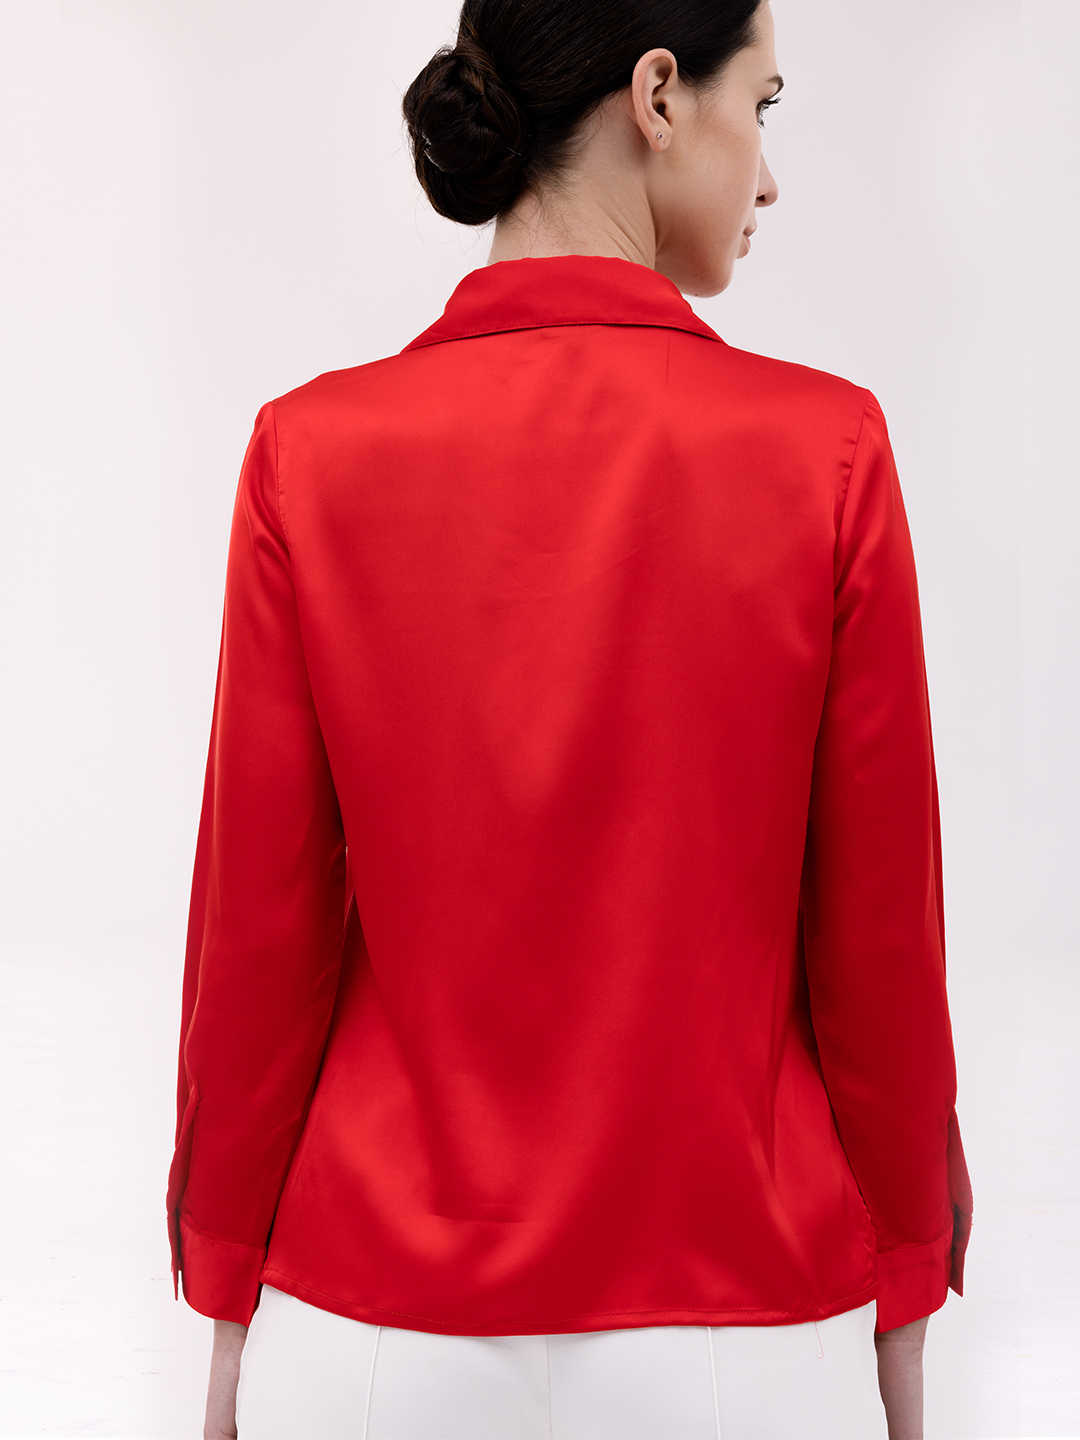 Red 9-5 Sleek Shirt - Back